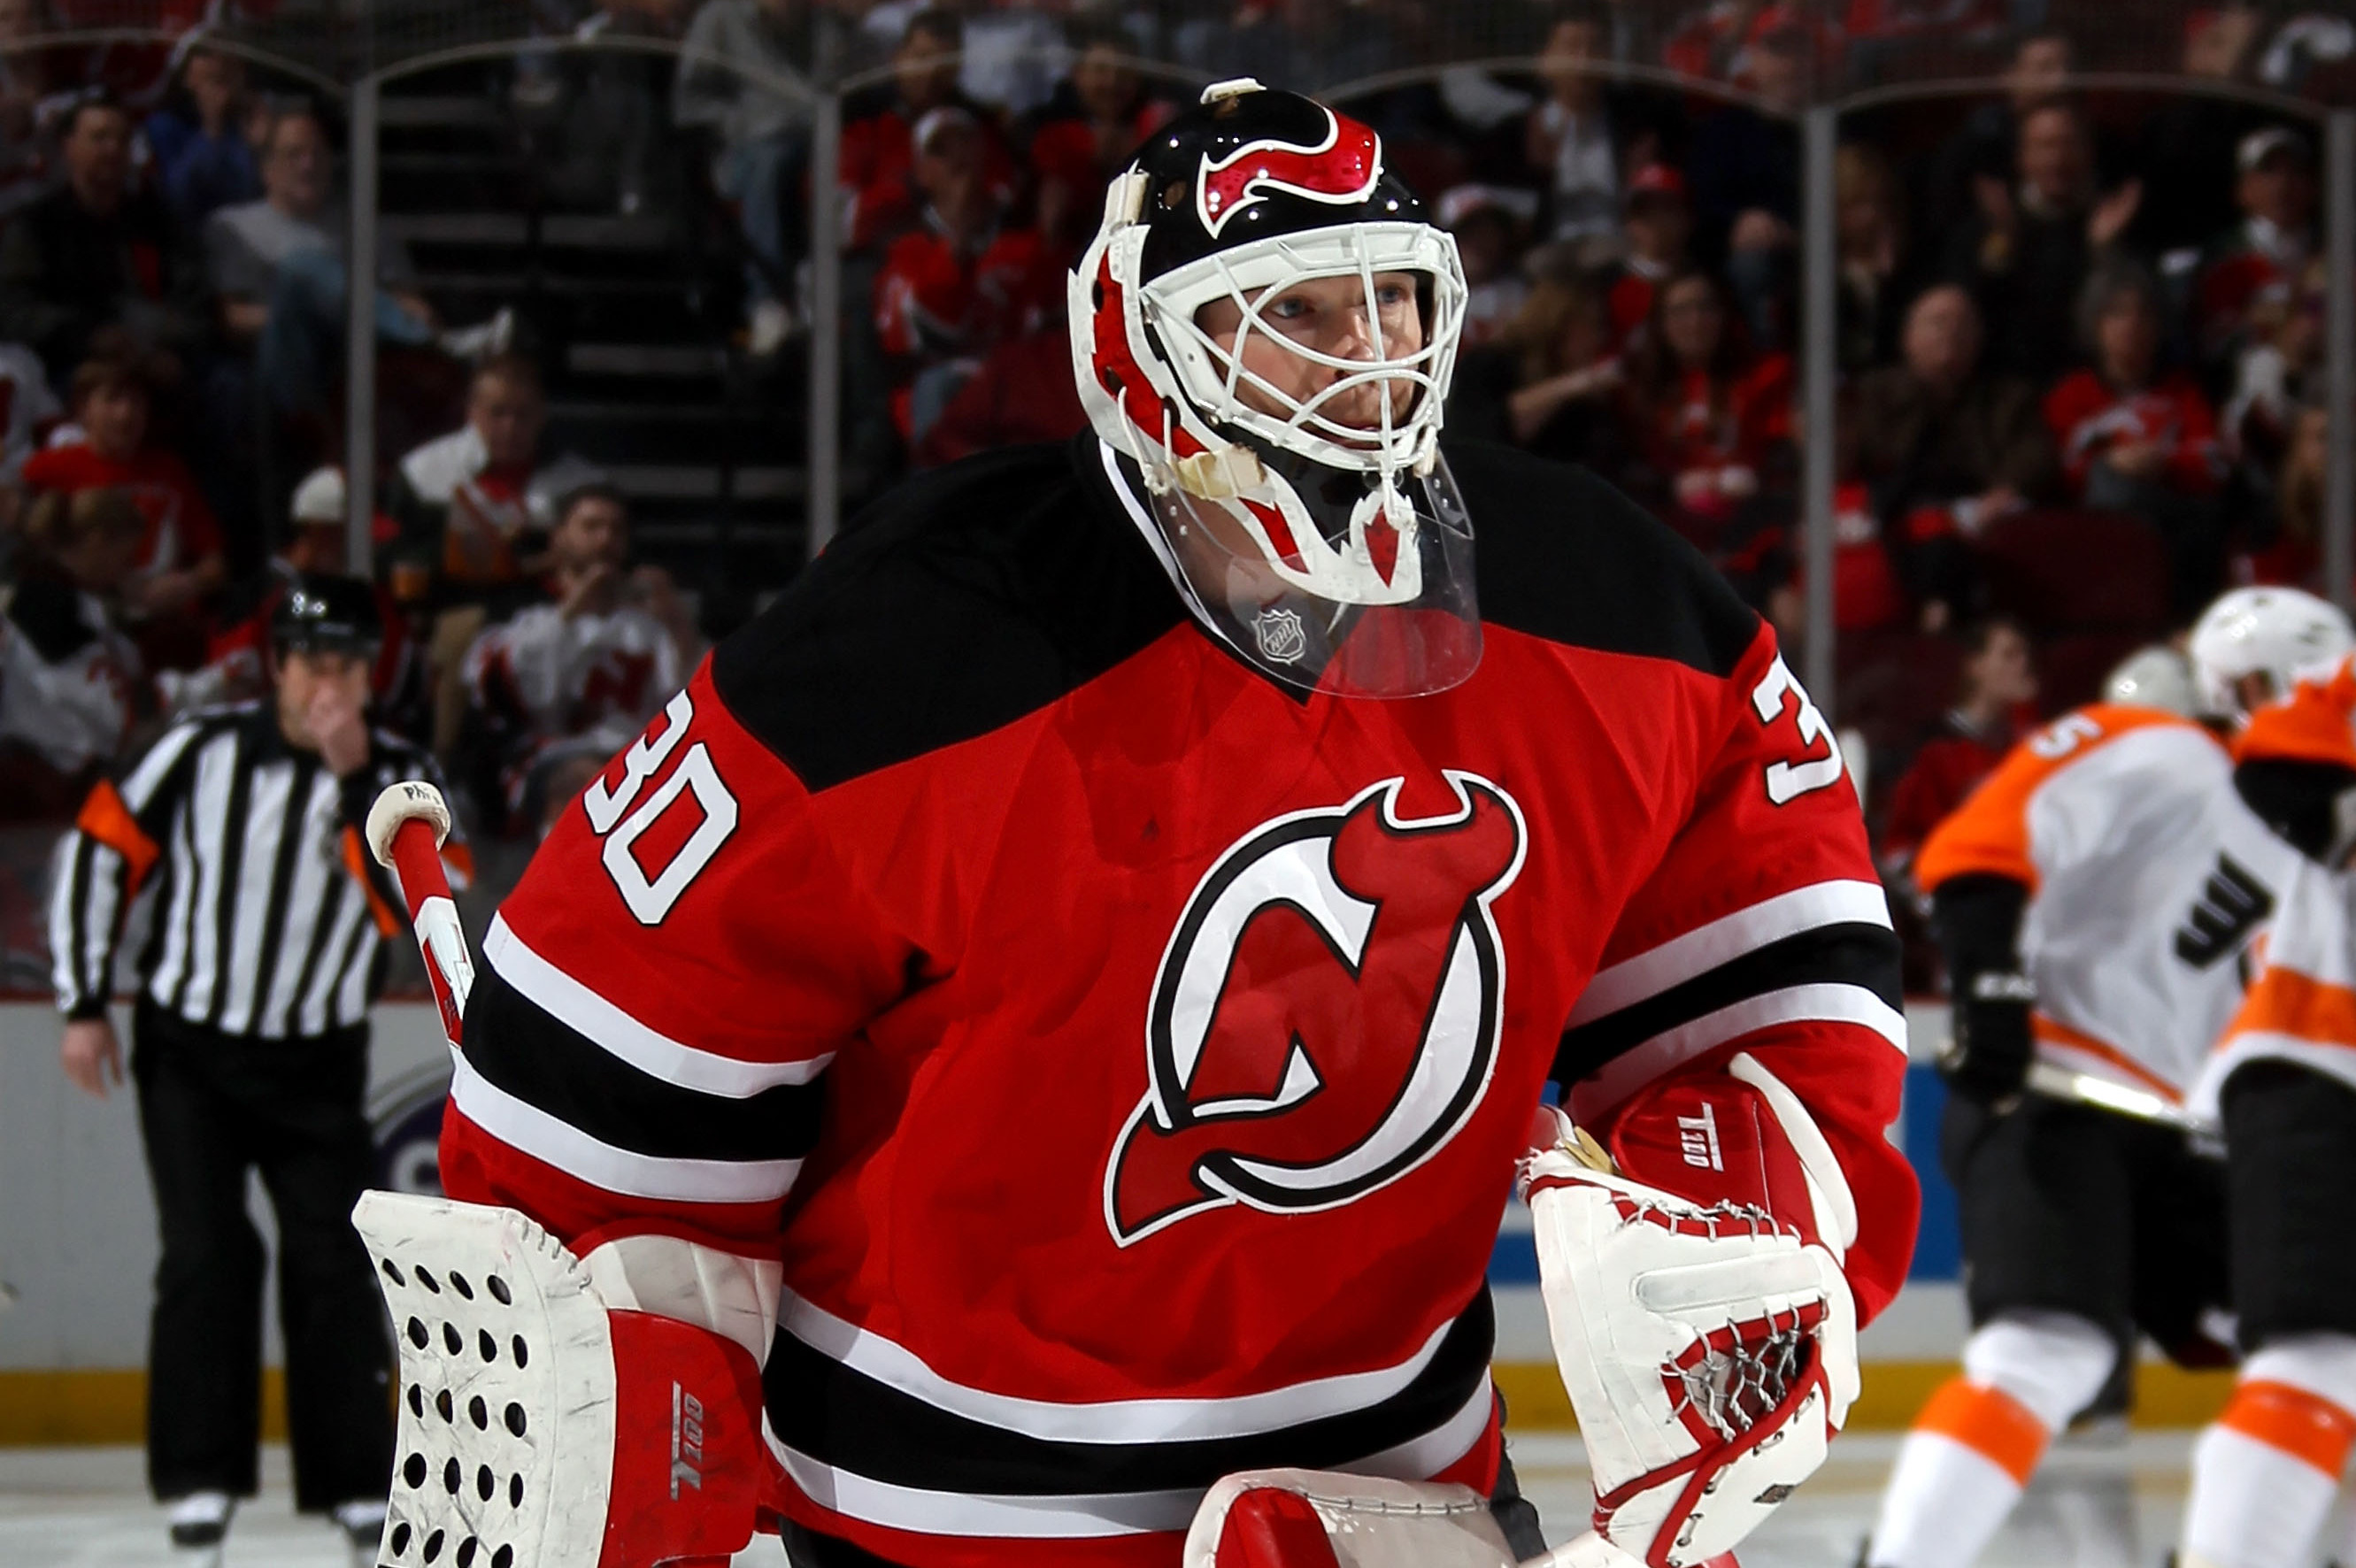 New Jersey Devils goalie Martin Brodeur scores his first NHL goal